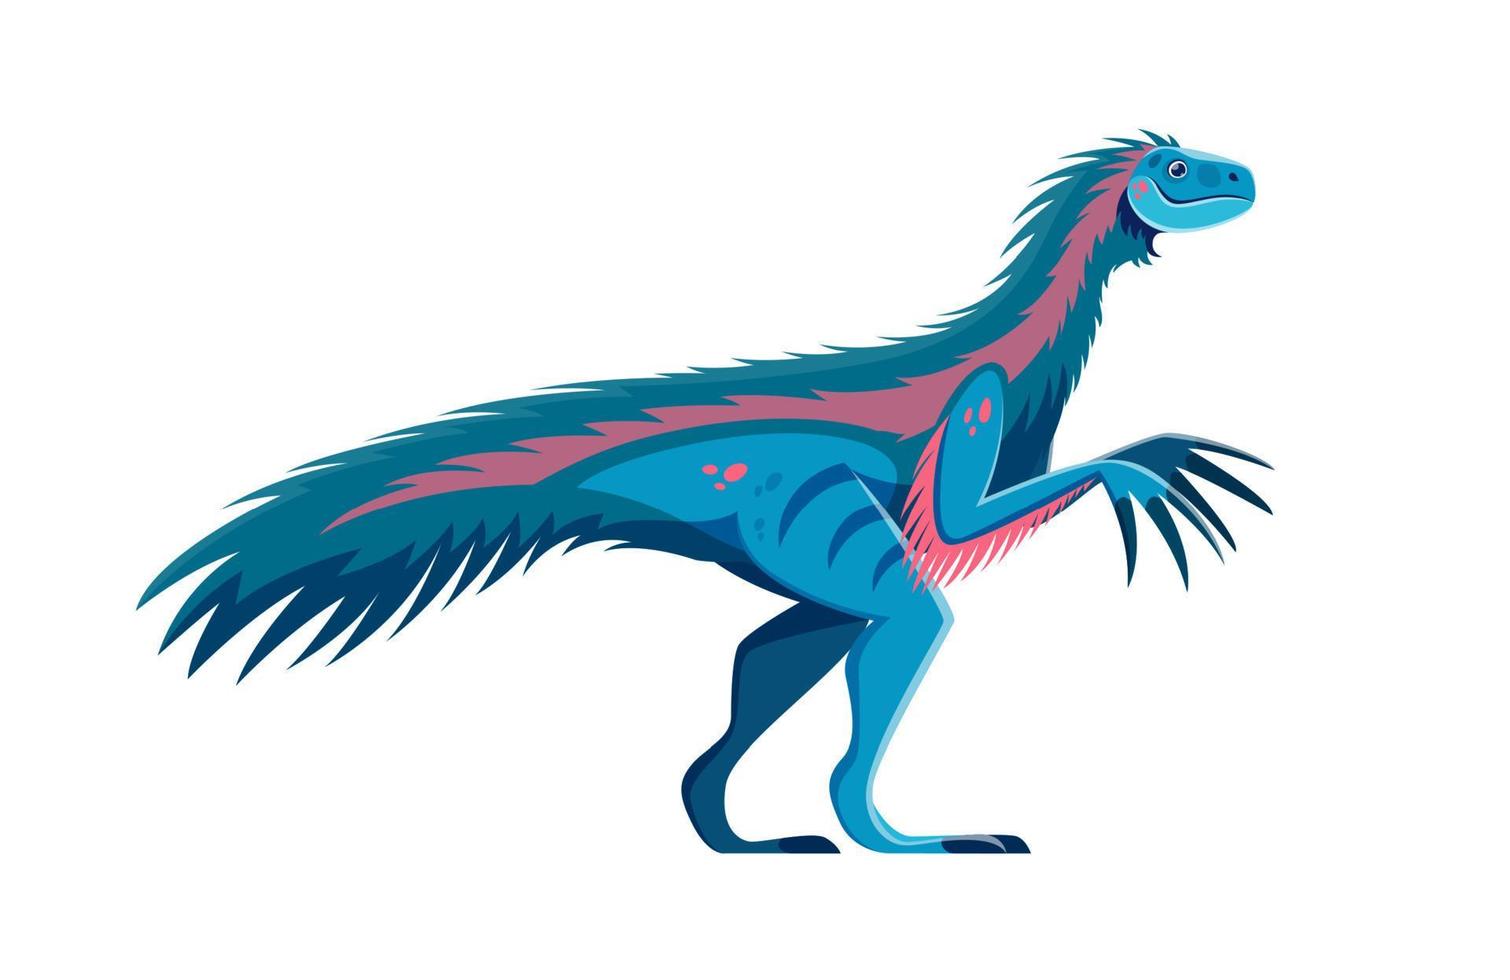 Cartoon Therizinosaurus dinosaur funny character vector